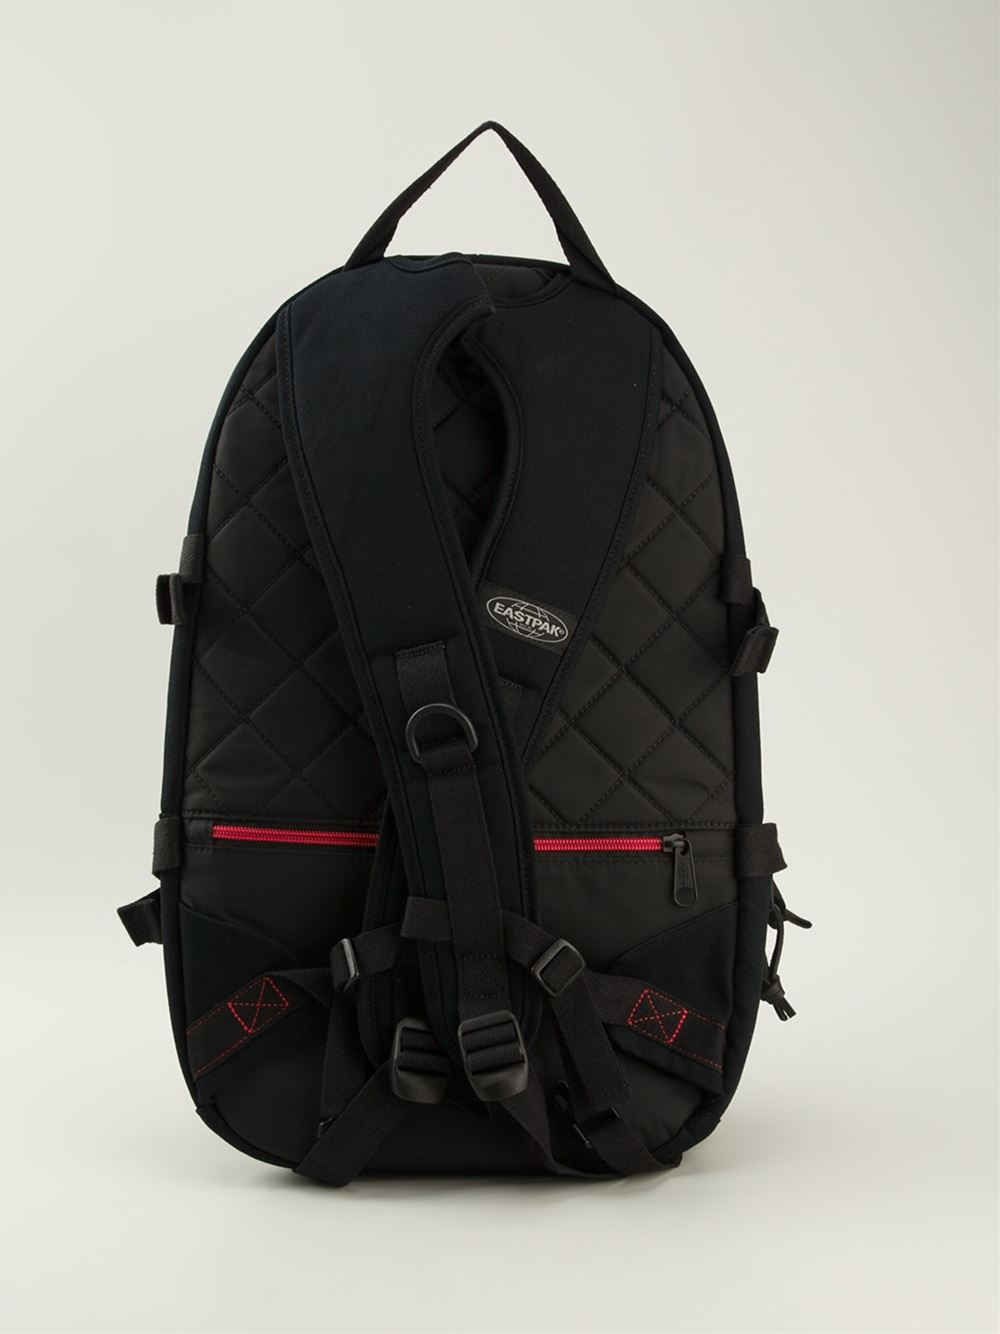 Eastpak Floid Backpack in Black for Men - Lyst